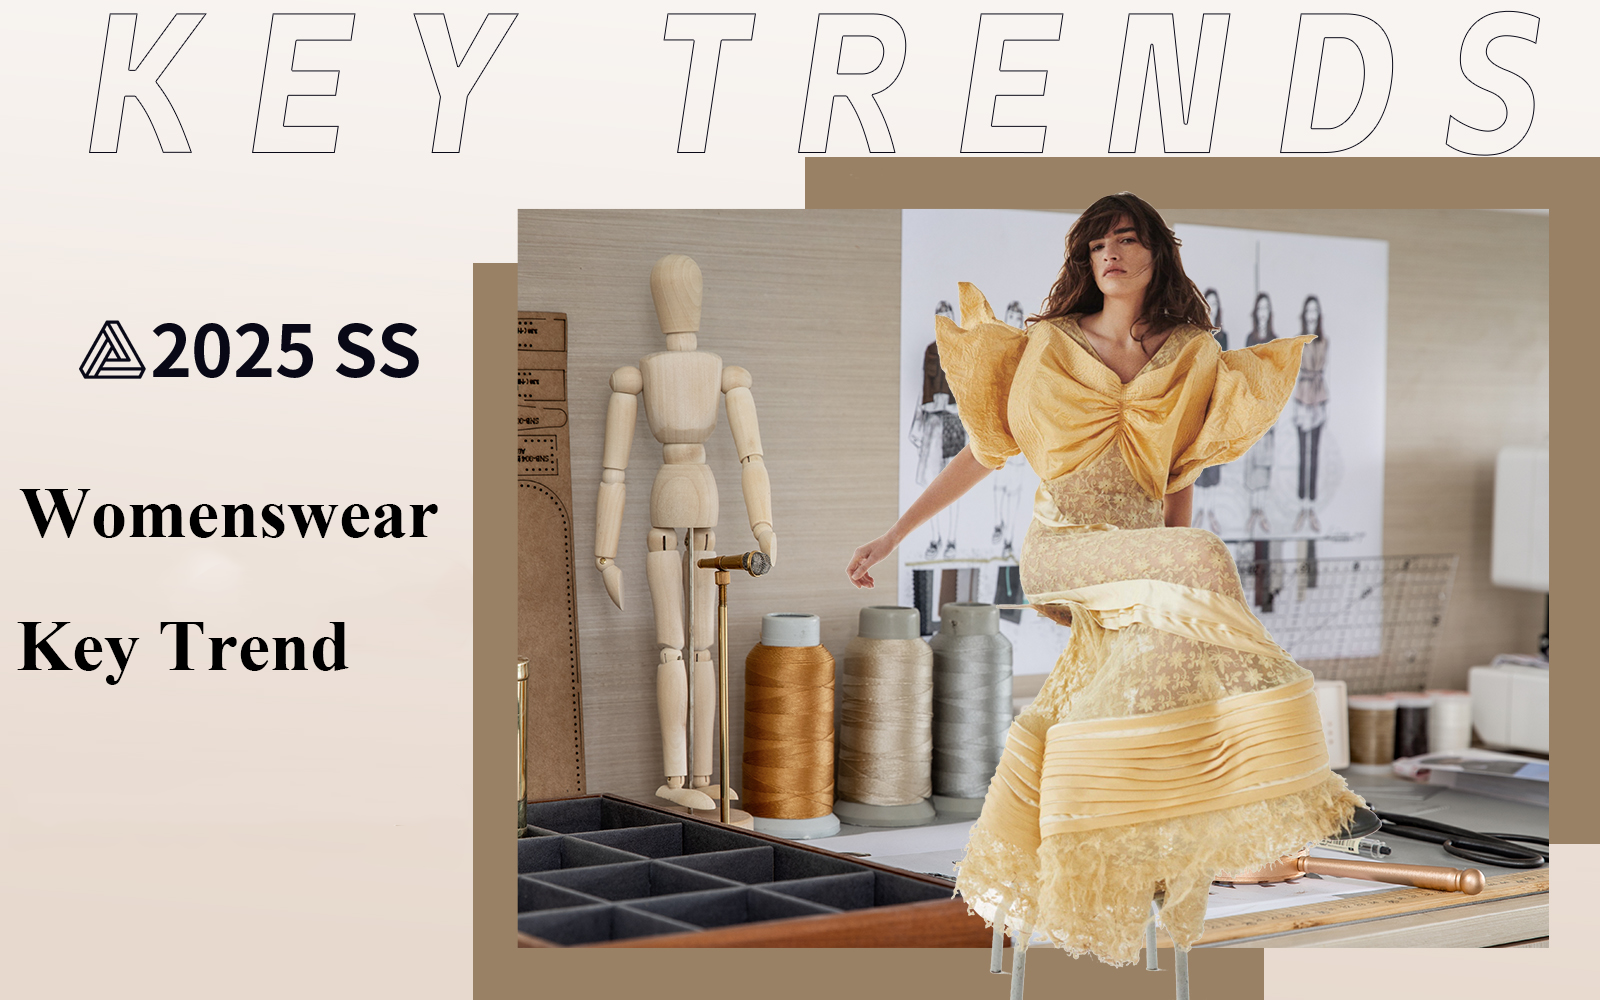 S/S 2025 Key Craft Trend for Womenswear